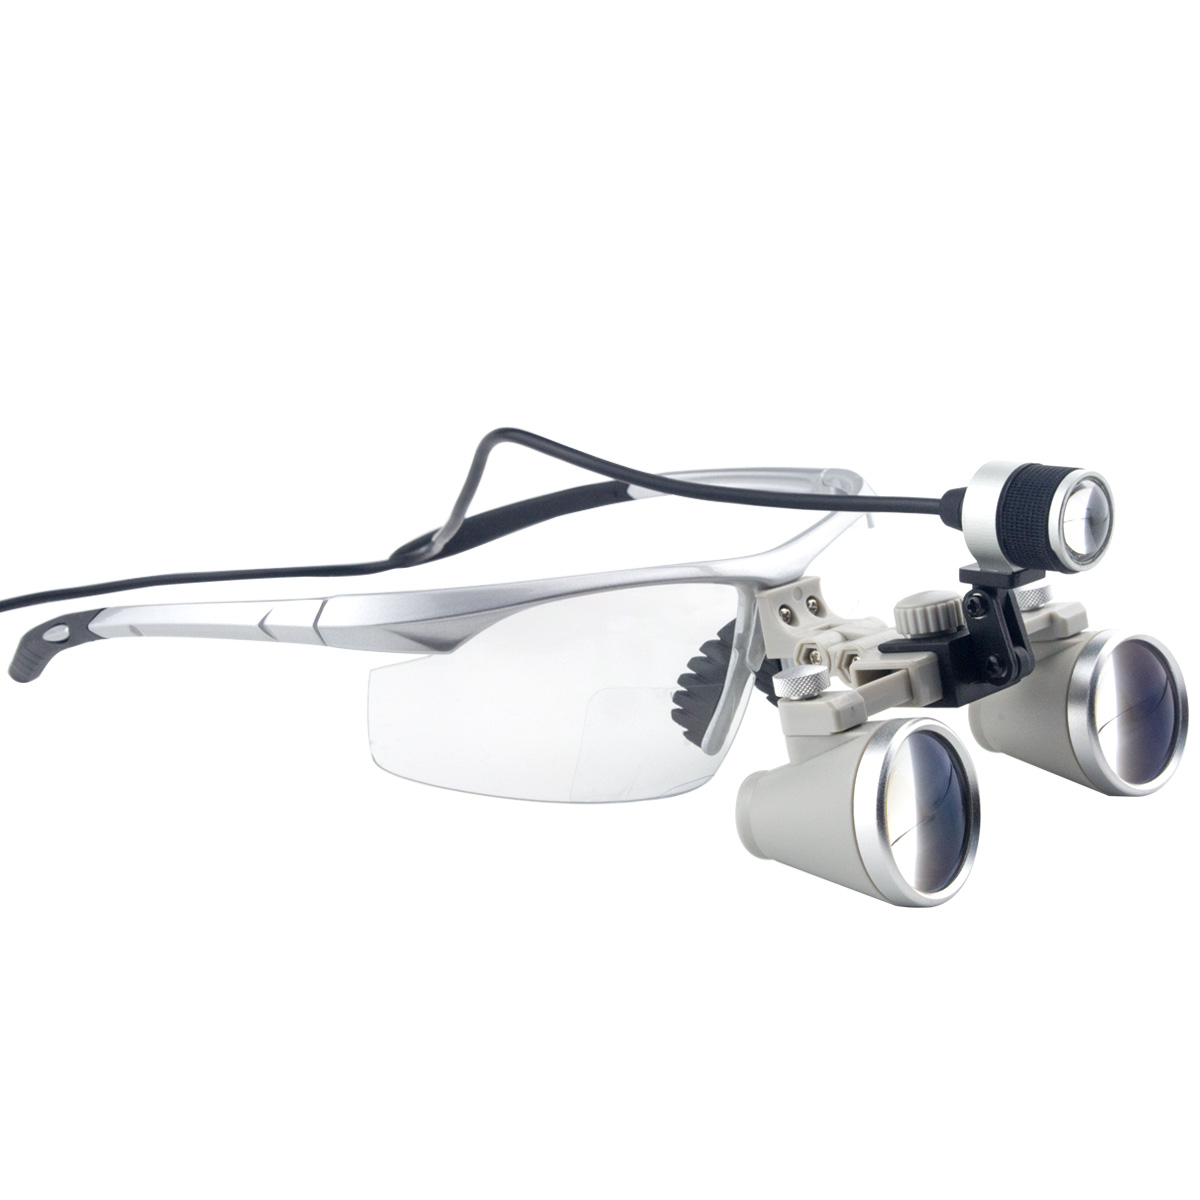 3.5x Vergroting Professional loepen met Silver BP Sport Frame en Mounted LED Head Light for Dental, chirurgisch, Juwelier, of hobby | Verstelbare Pupil Afstand Model # CH350AXSL